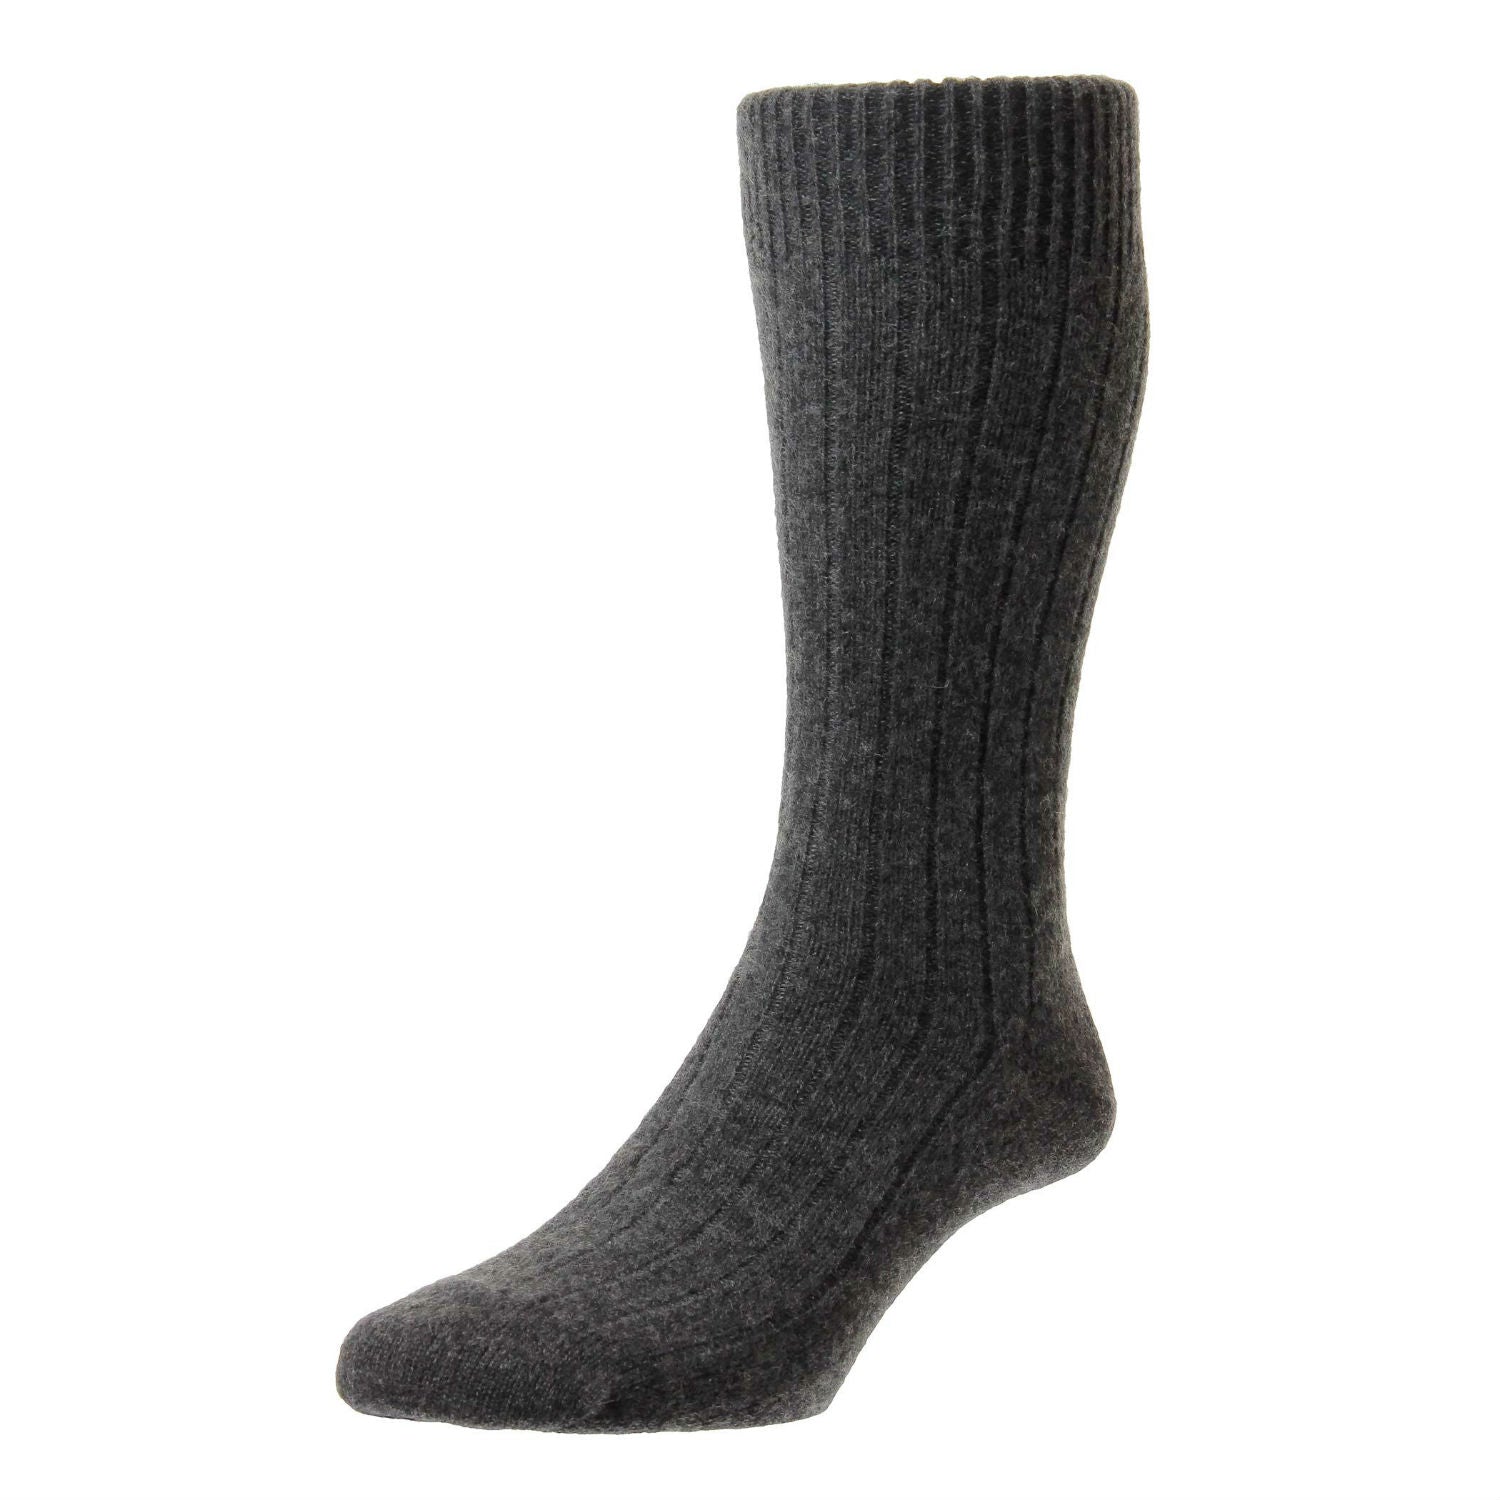 pantherella-socks-cashmere-mens-socks-denim-charcoal-grey